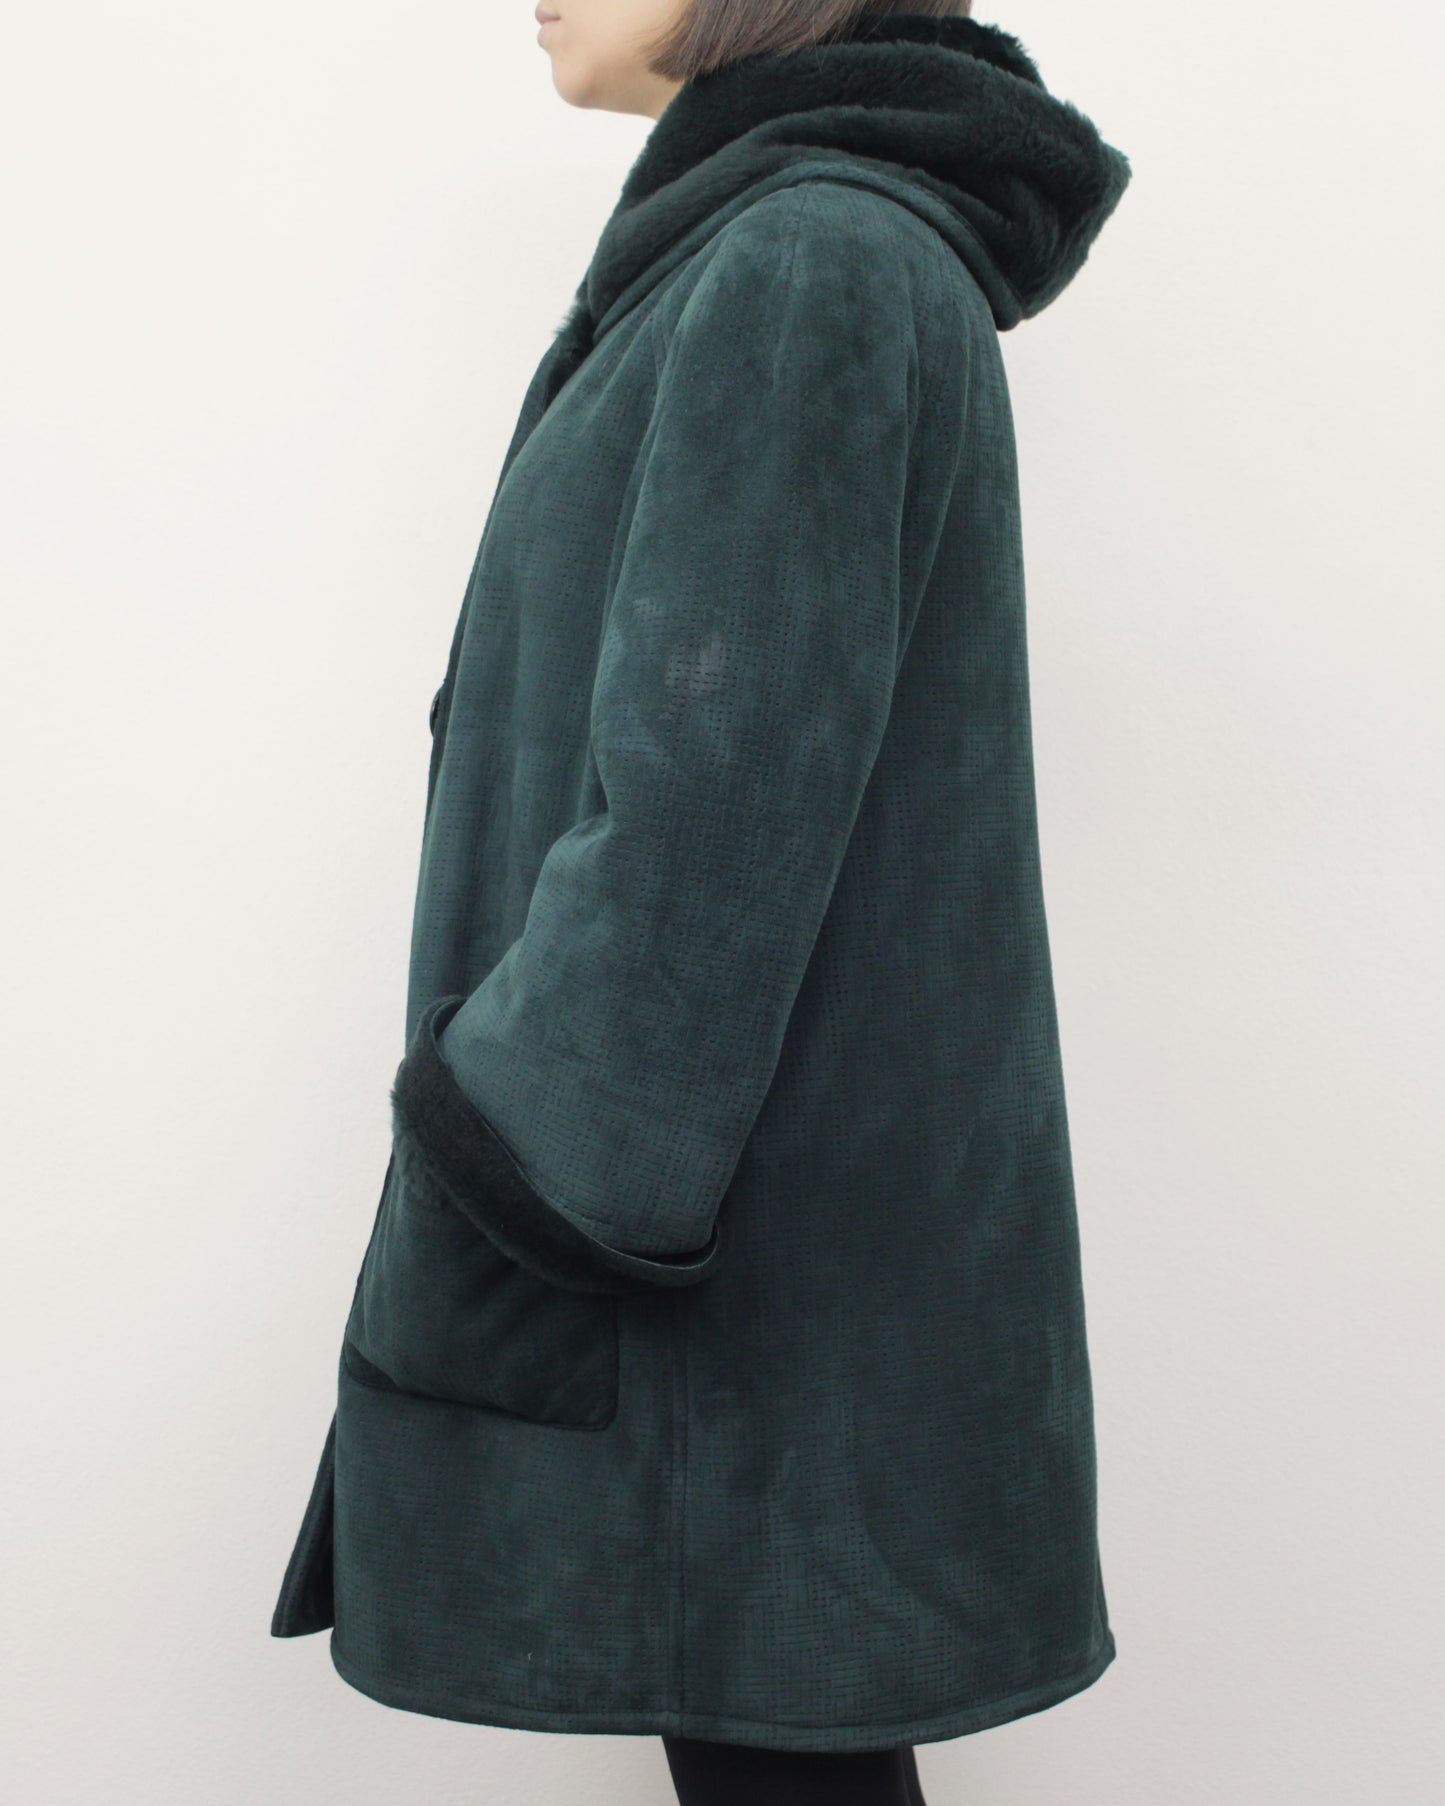 Veste en peau de mouton pour femme - Collection Artisan Made in Italy par Ferdinando Patermo